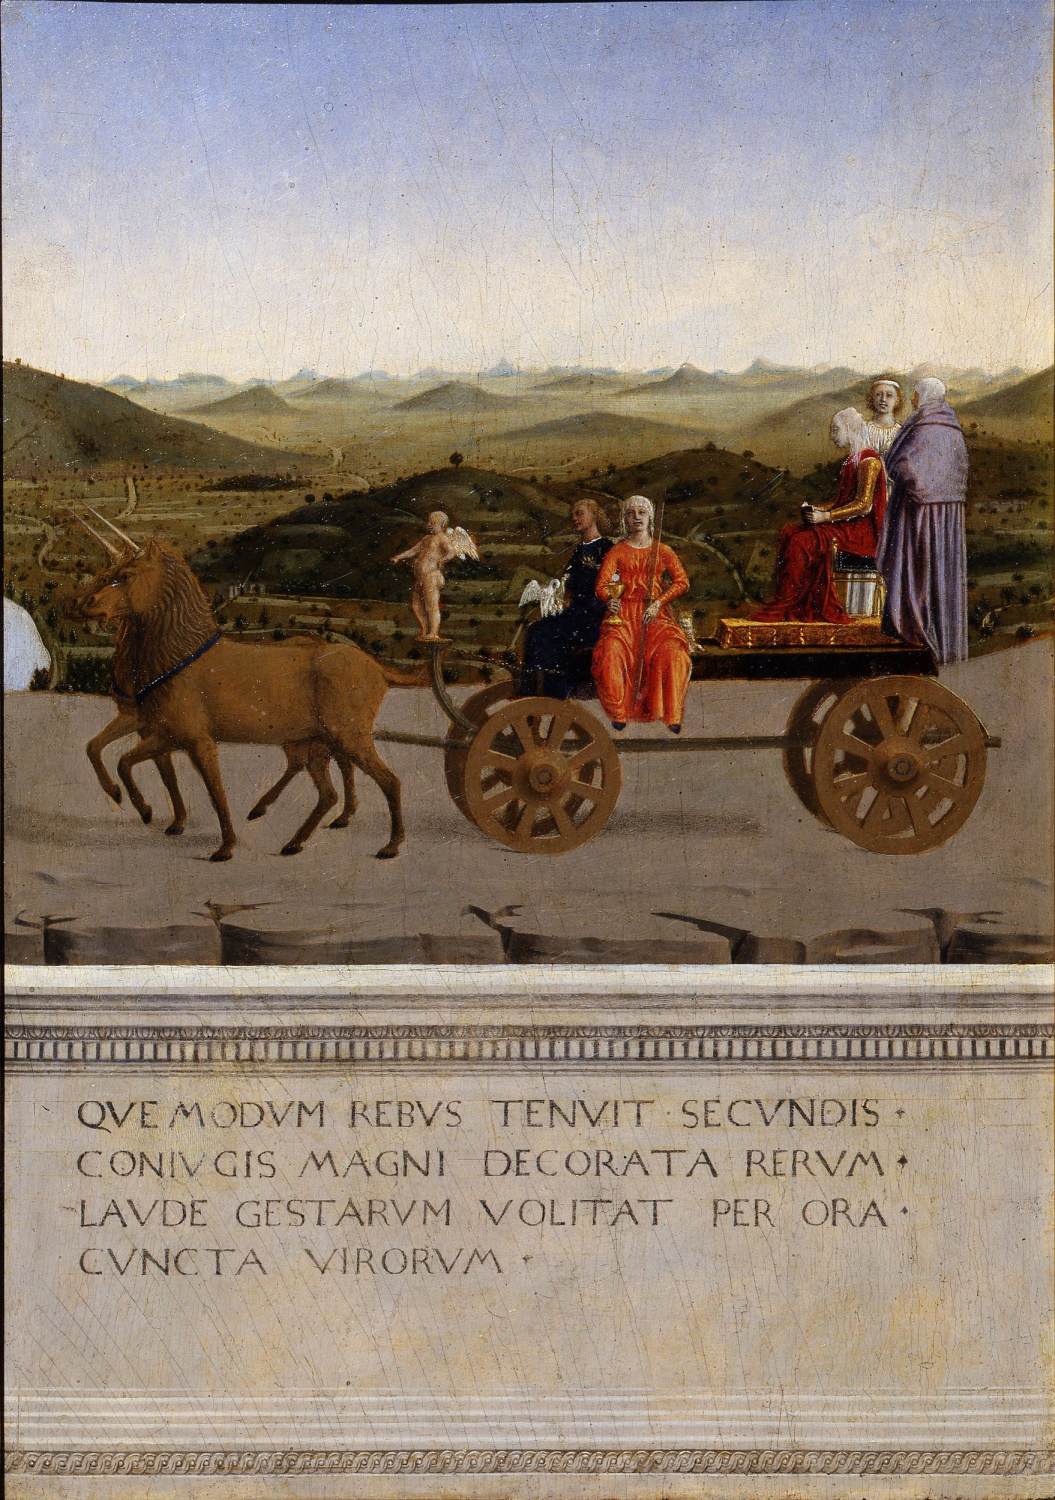 O triunfo de Battista Sforza